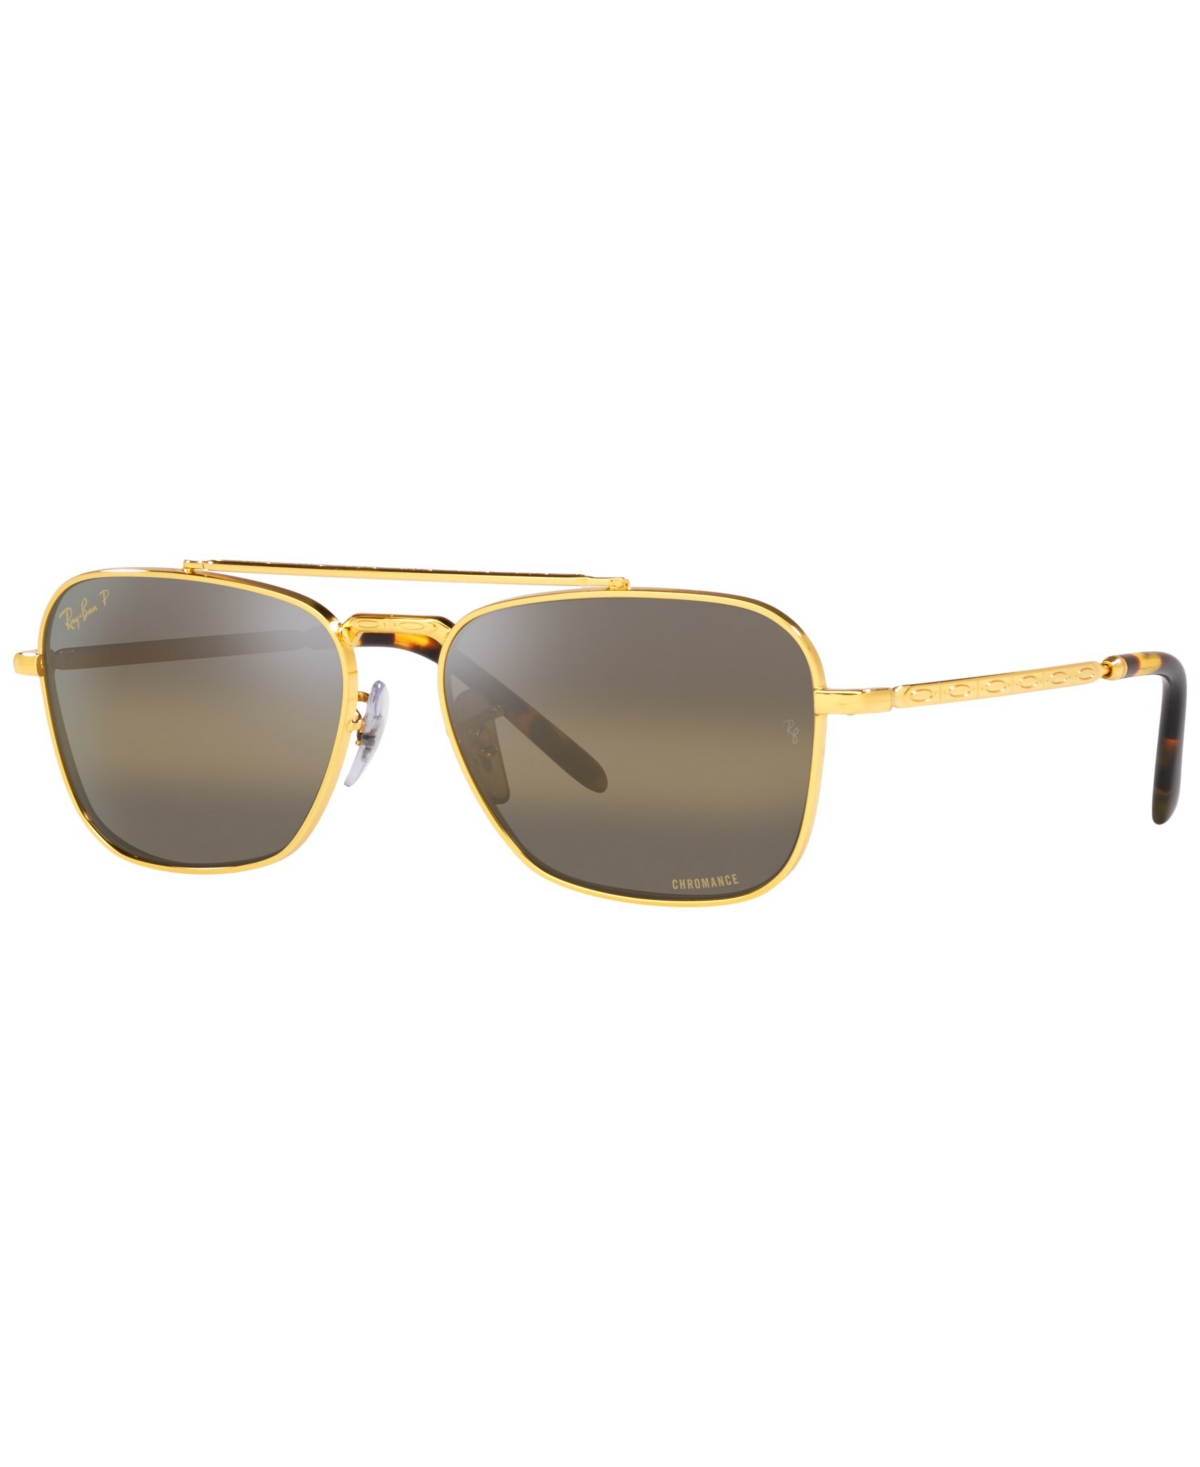 Ray Ban New Caravan Sunglasses Gold Frame Brown Lenses Polarized 58-15 ...